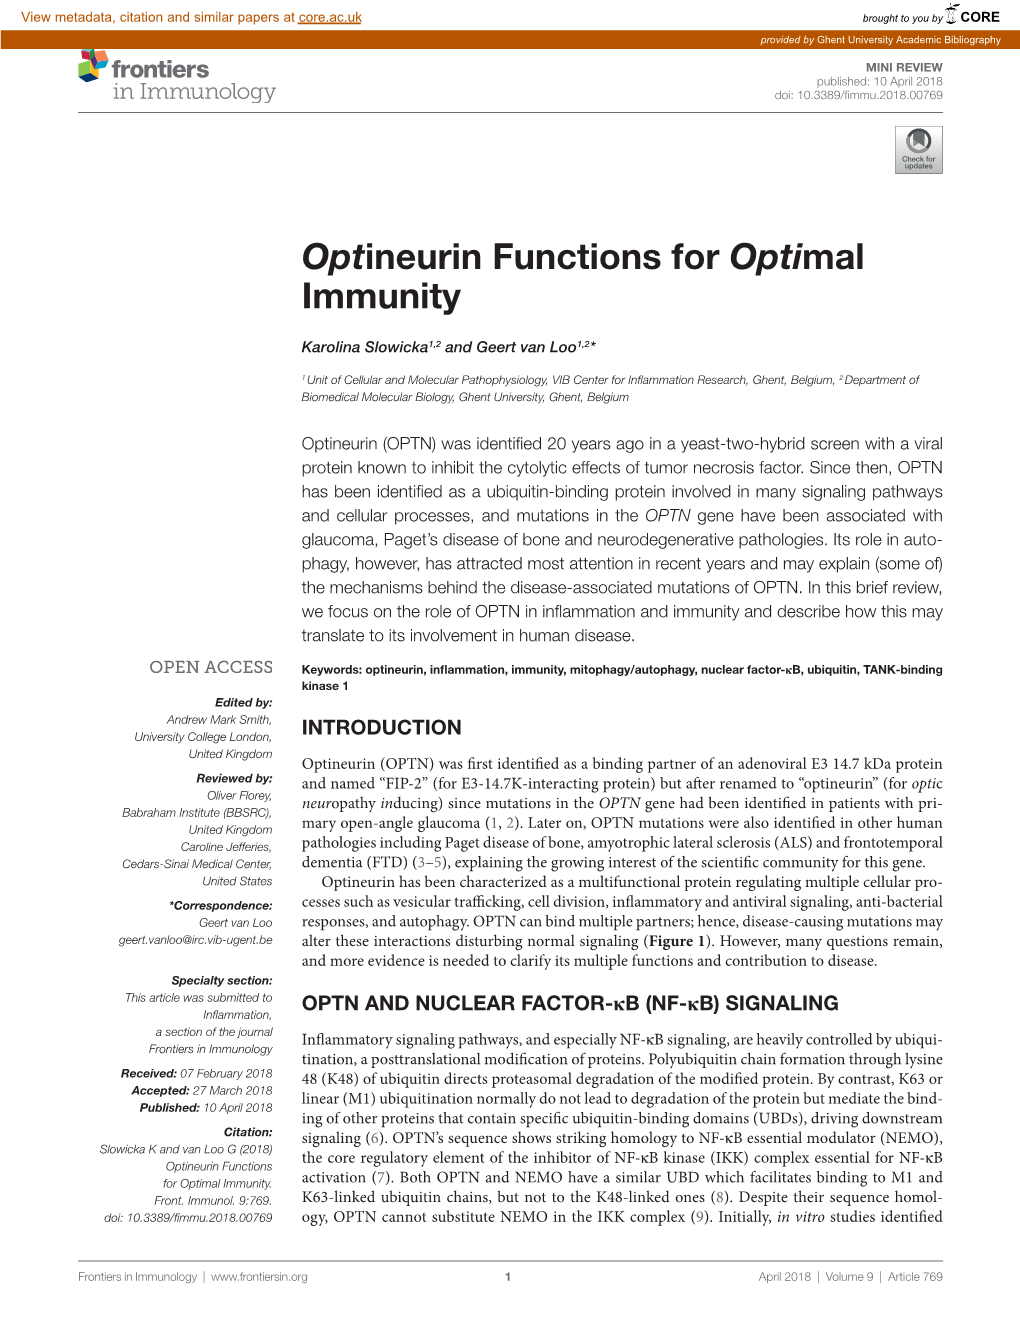 Optineurin Functions for Optimal Immunity